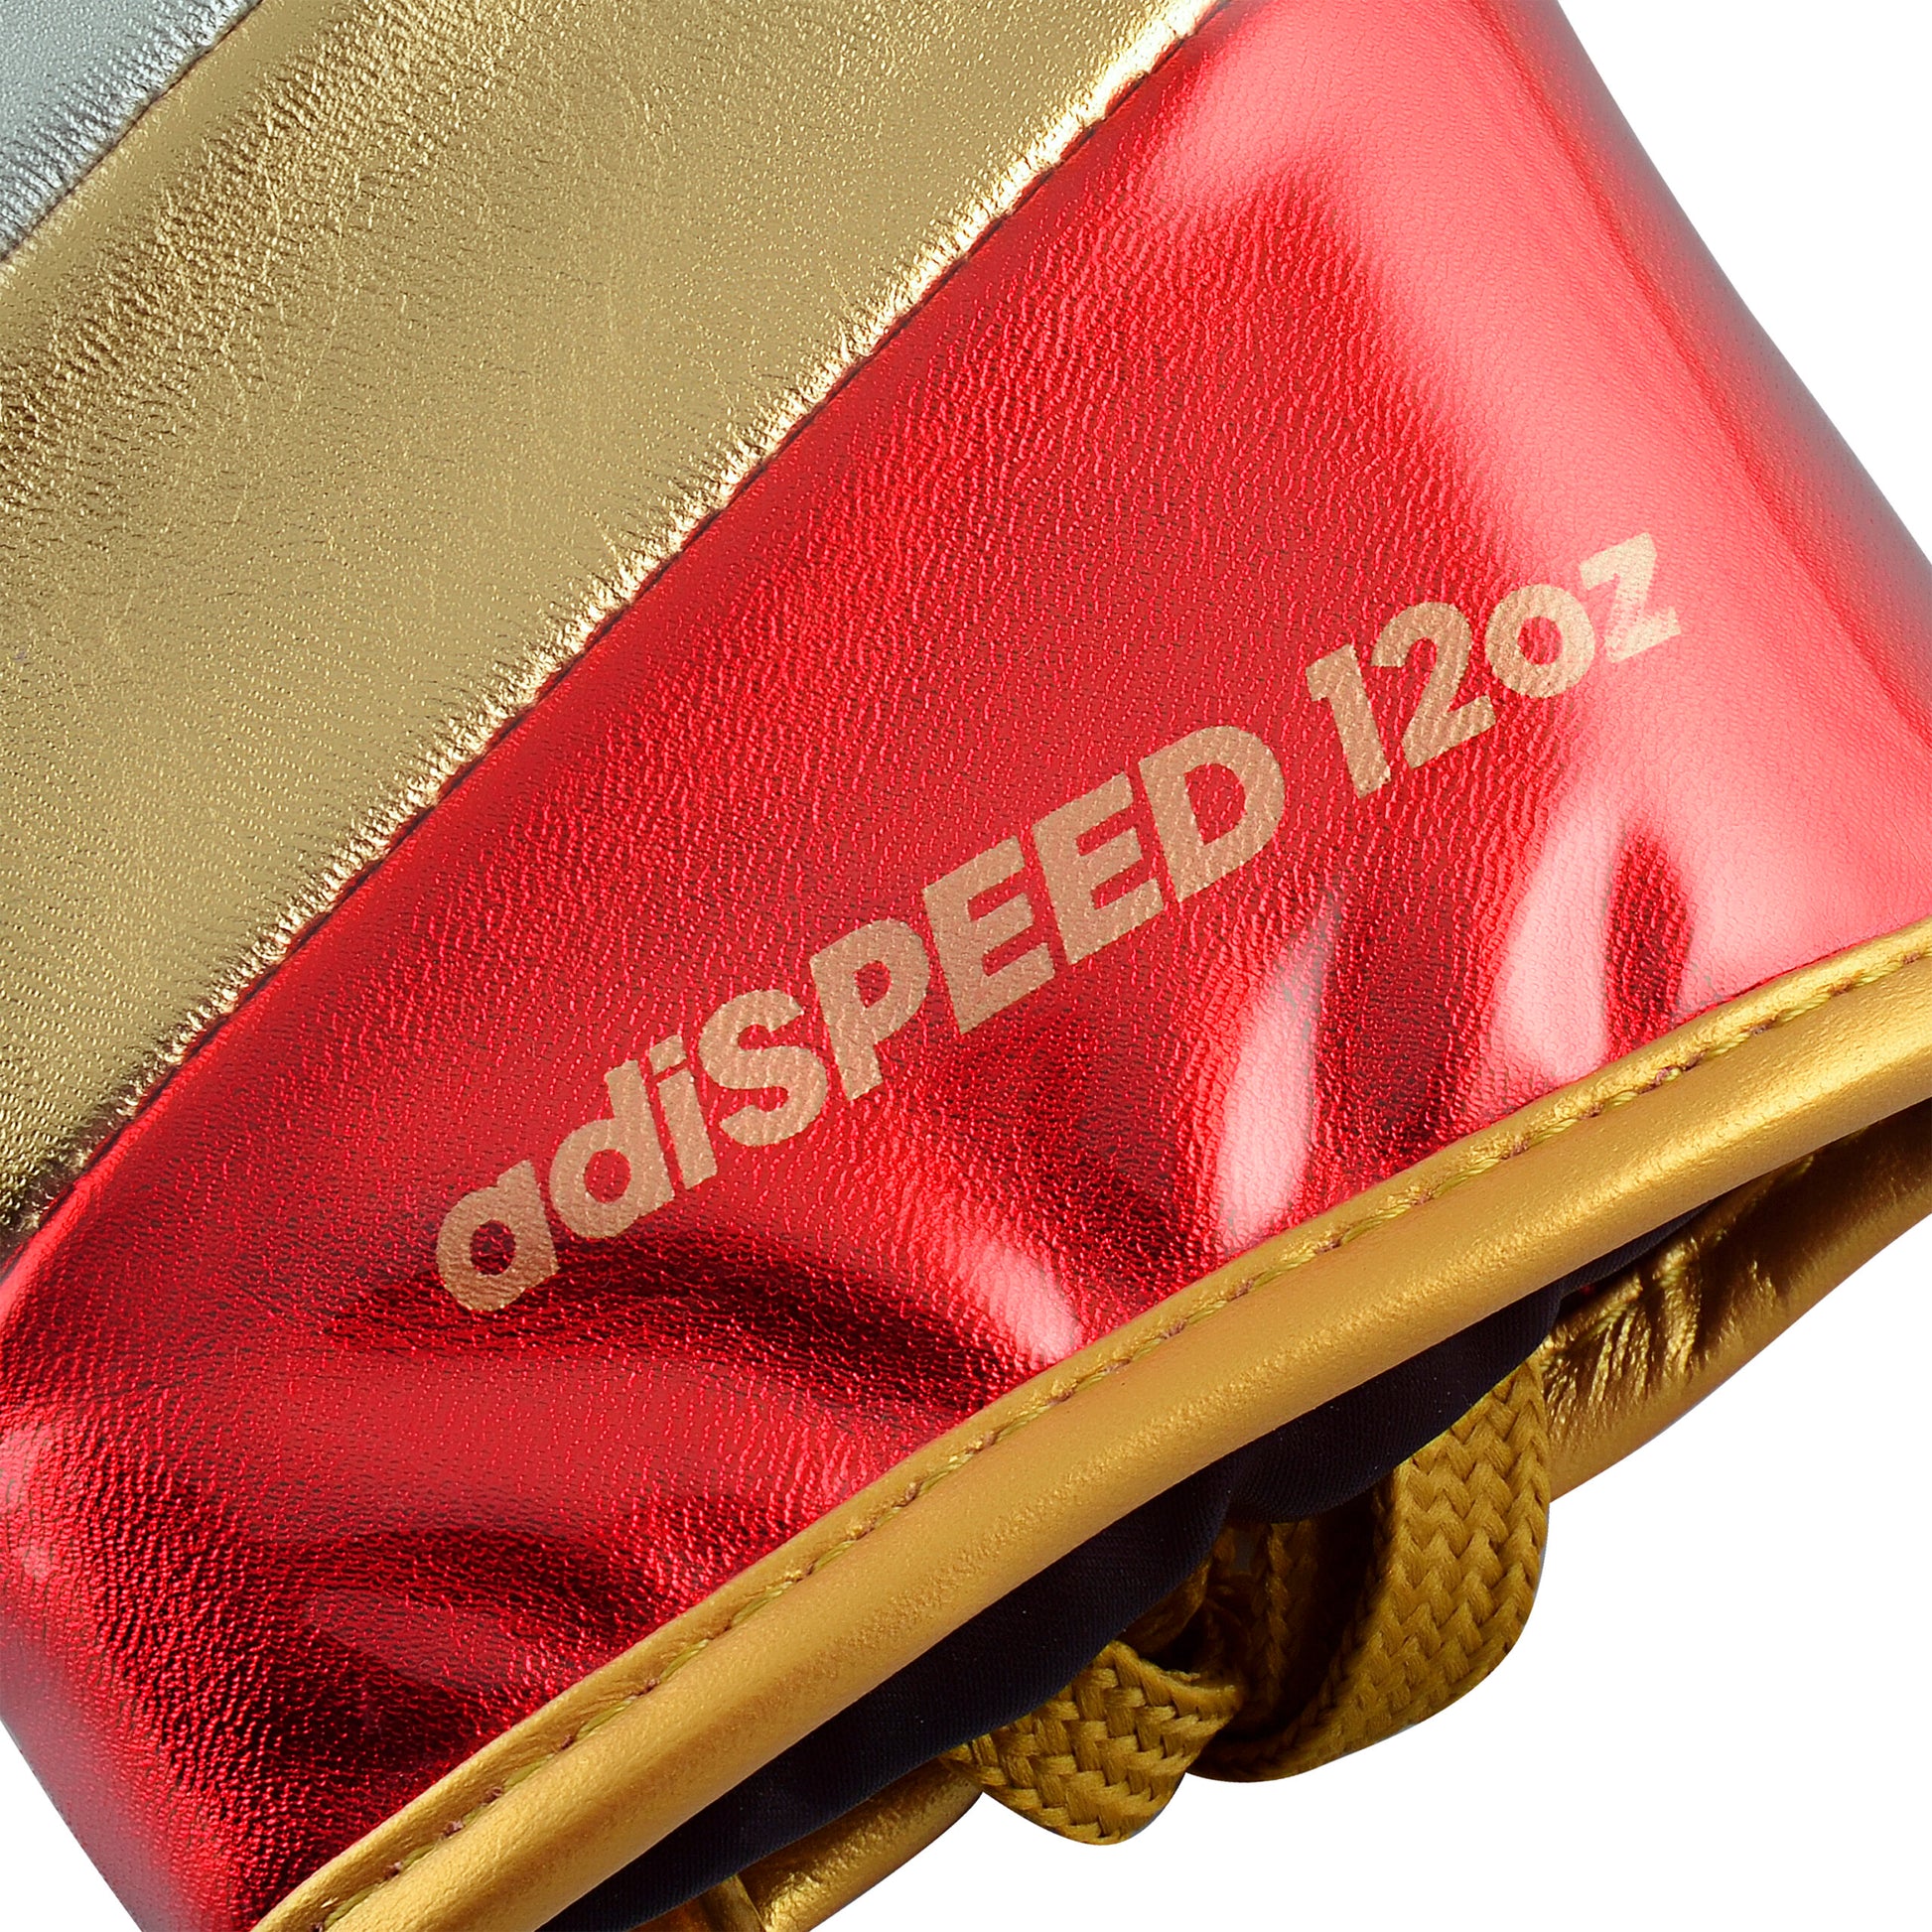 Adisbg500 Red Gold Silver Close Ip 06